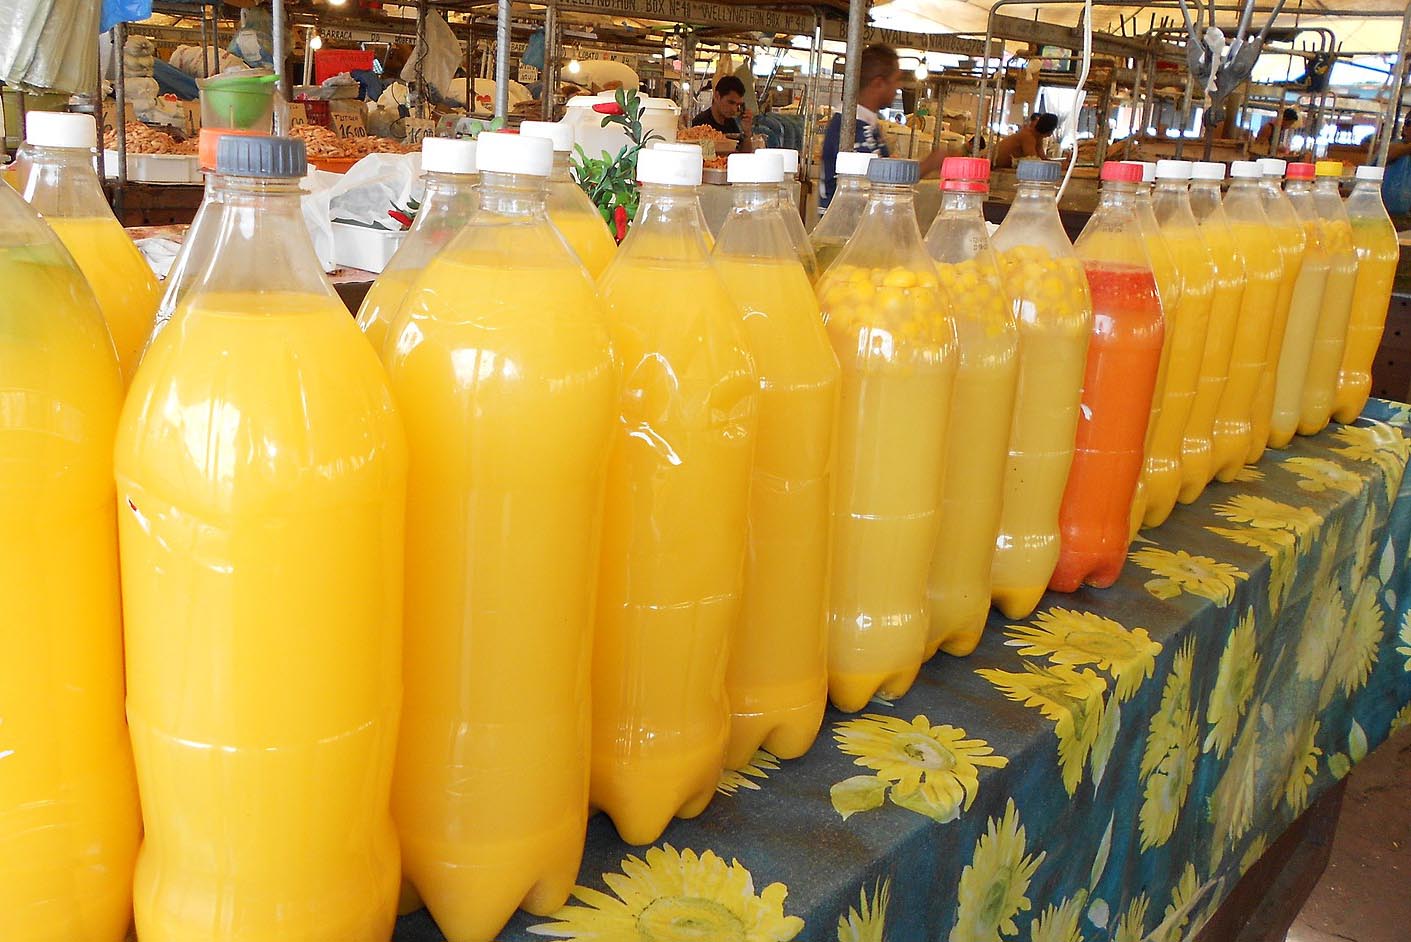 Many large plastic bottles full of yellow tucupi sauce. Food market in background.